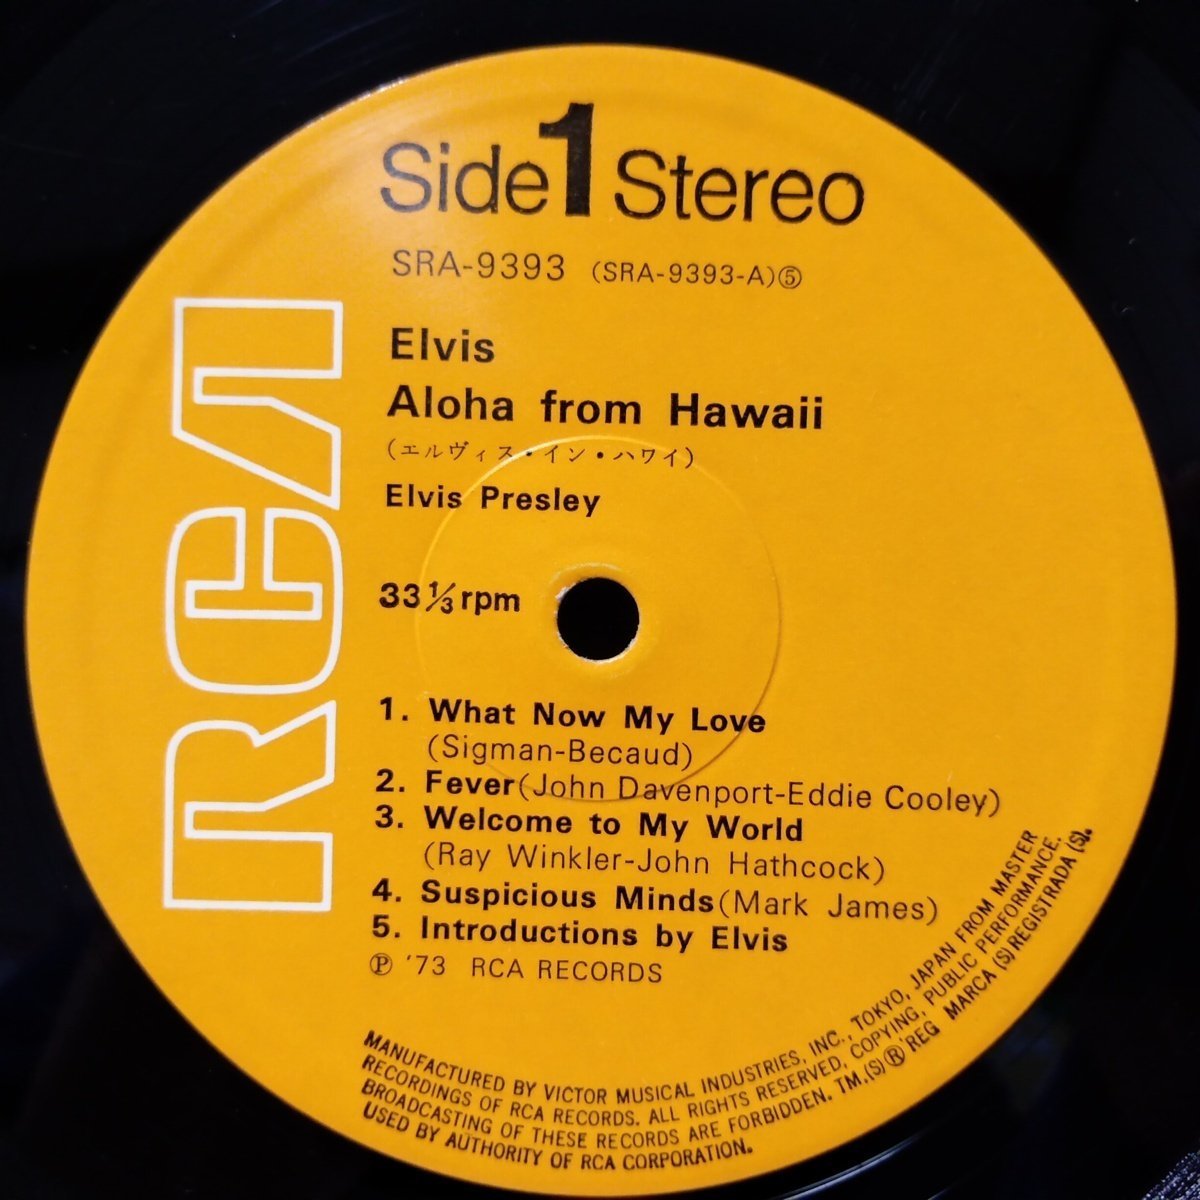  L vi s Press Lee in Гаваи *1973 год Honolulu Live сбор!* записано в Японии видеть открытие жакет specification * аналог запись [6630RP